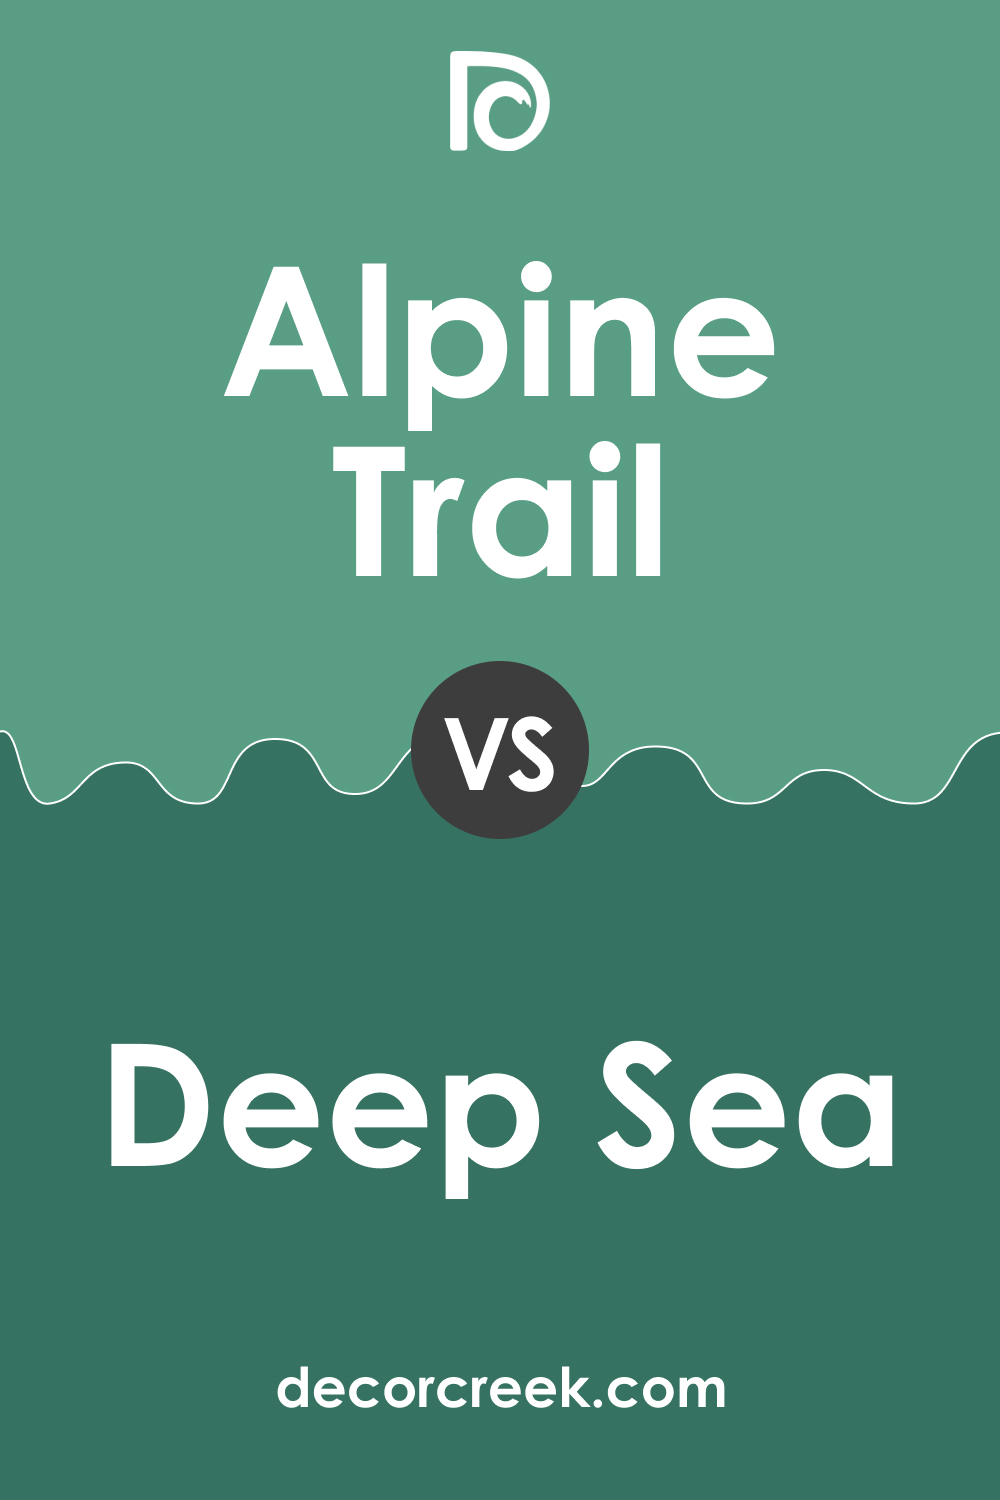 Alpine Trail 622 vs. BM 623 Deep Sea